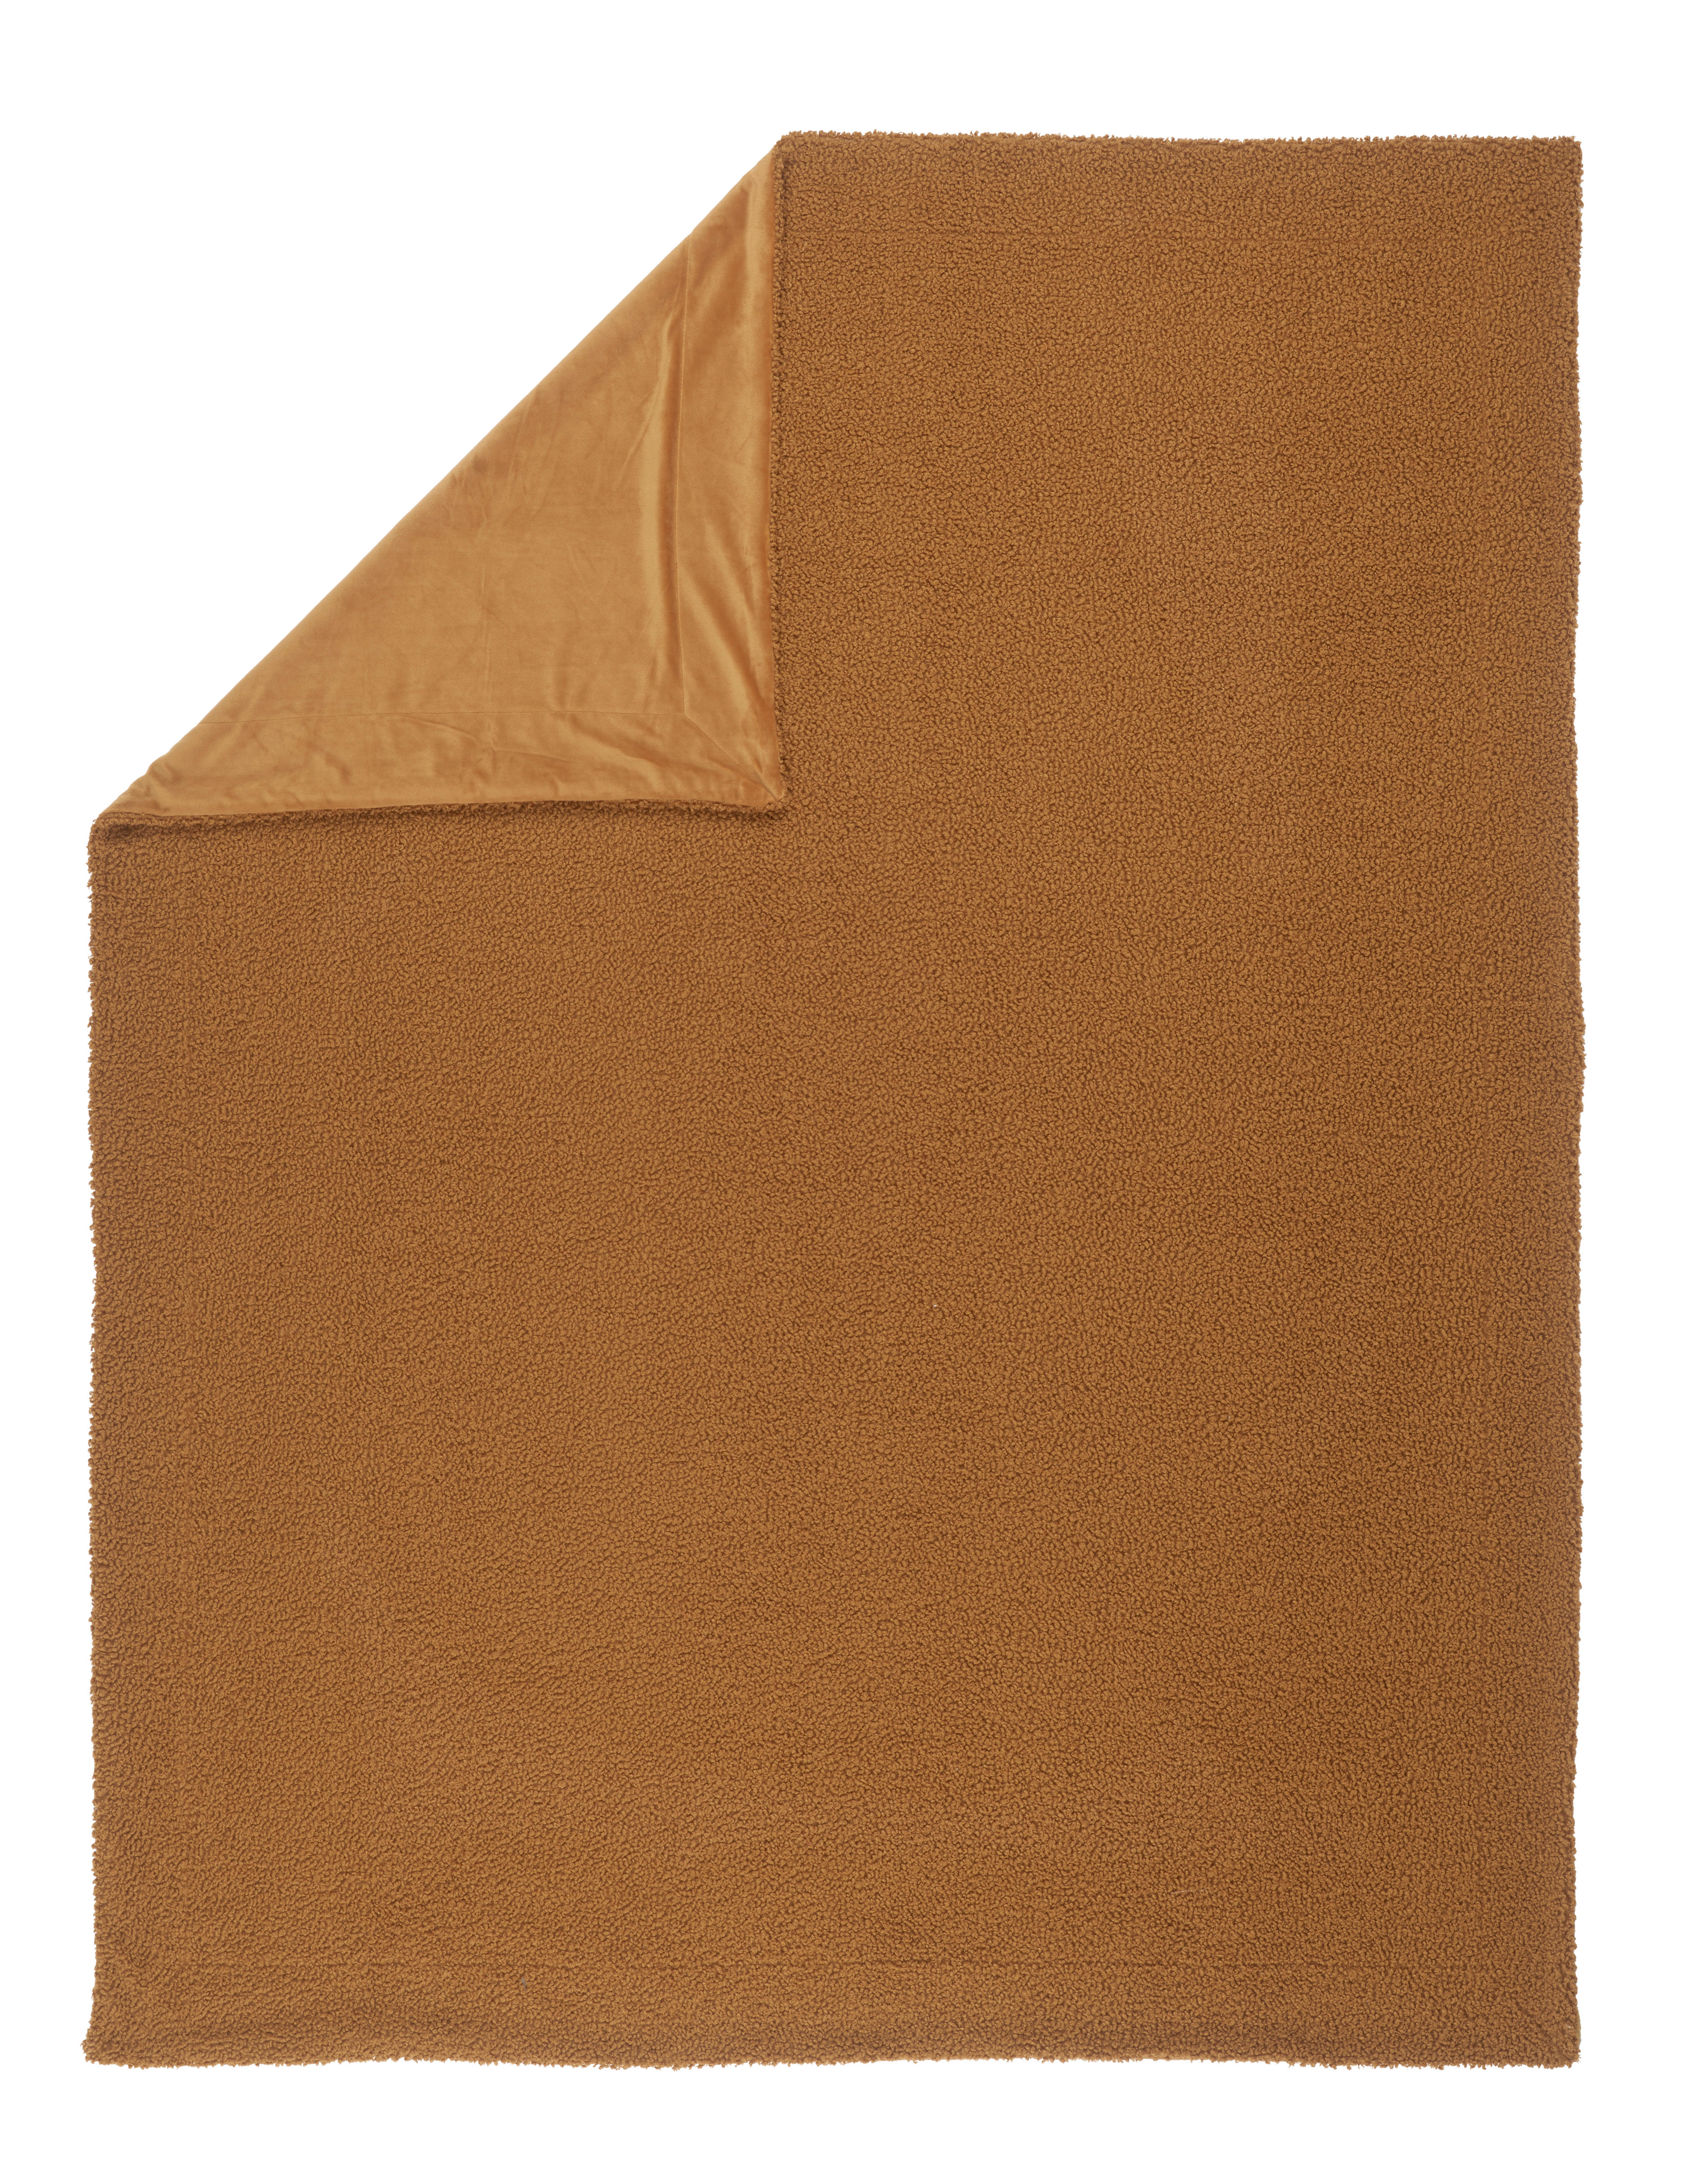 WOHNDECKE Curly 150/200 cm  - Goldfarben, Design, Textil (150/200cm) - Novel